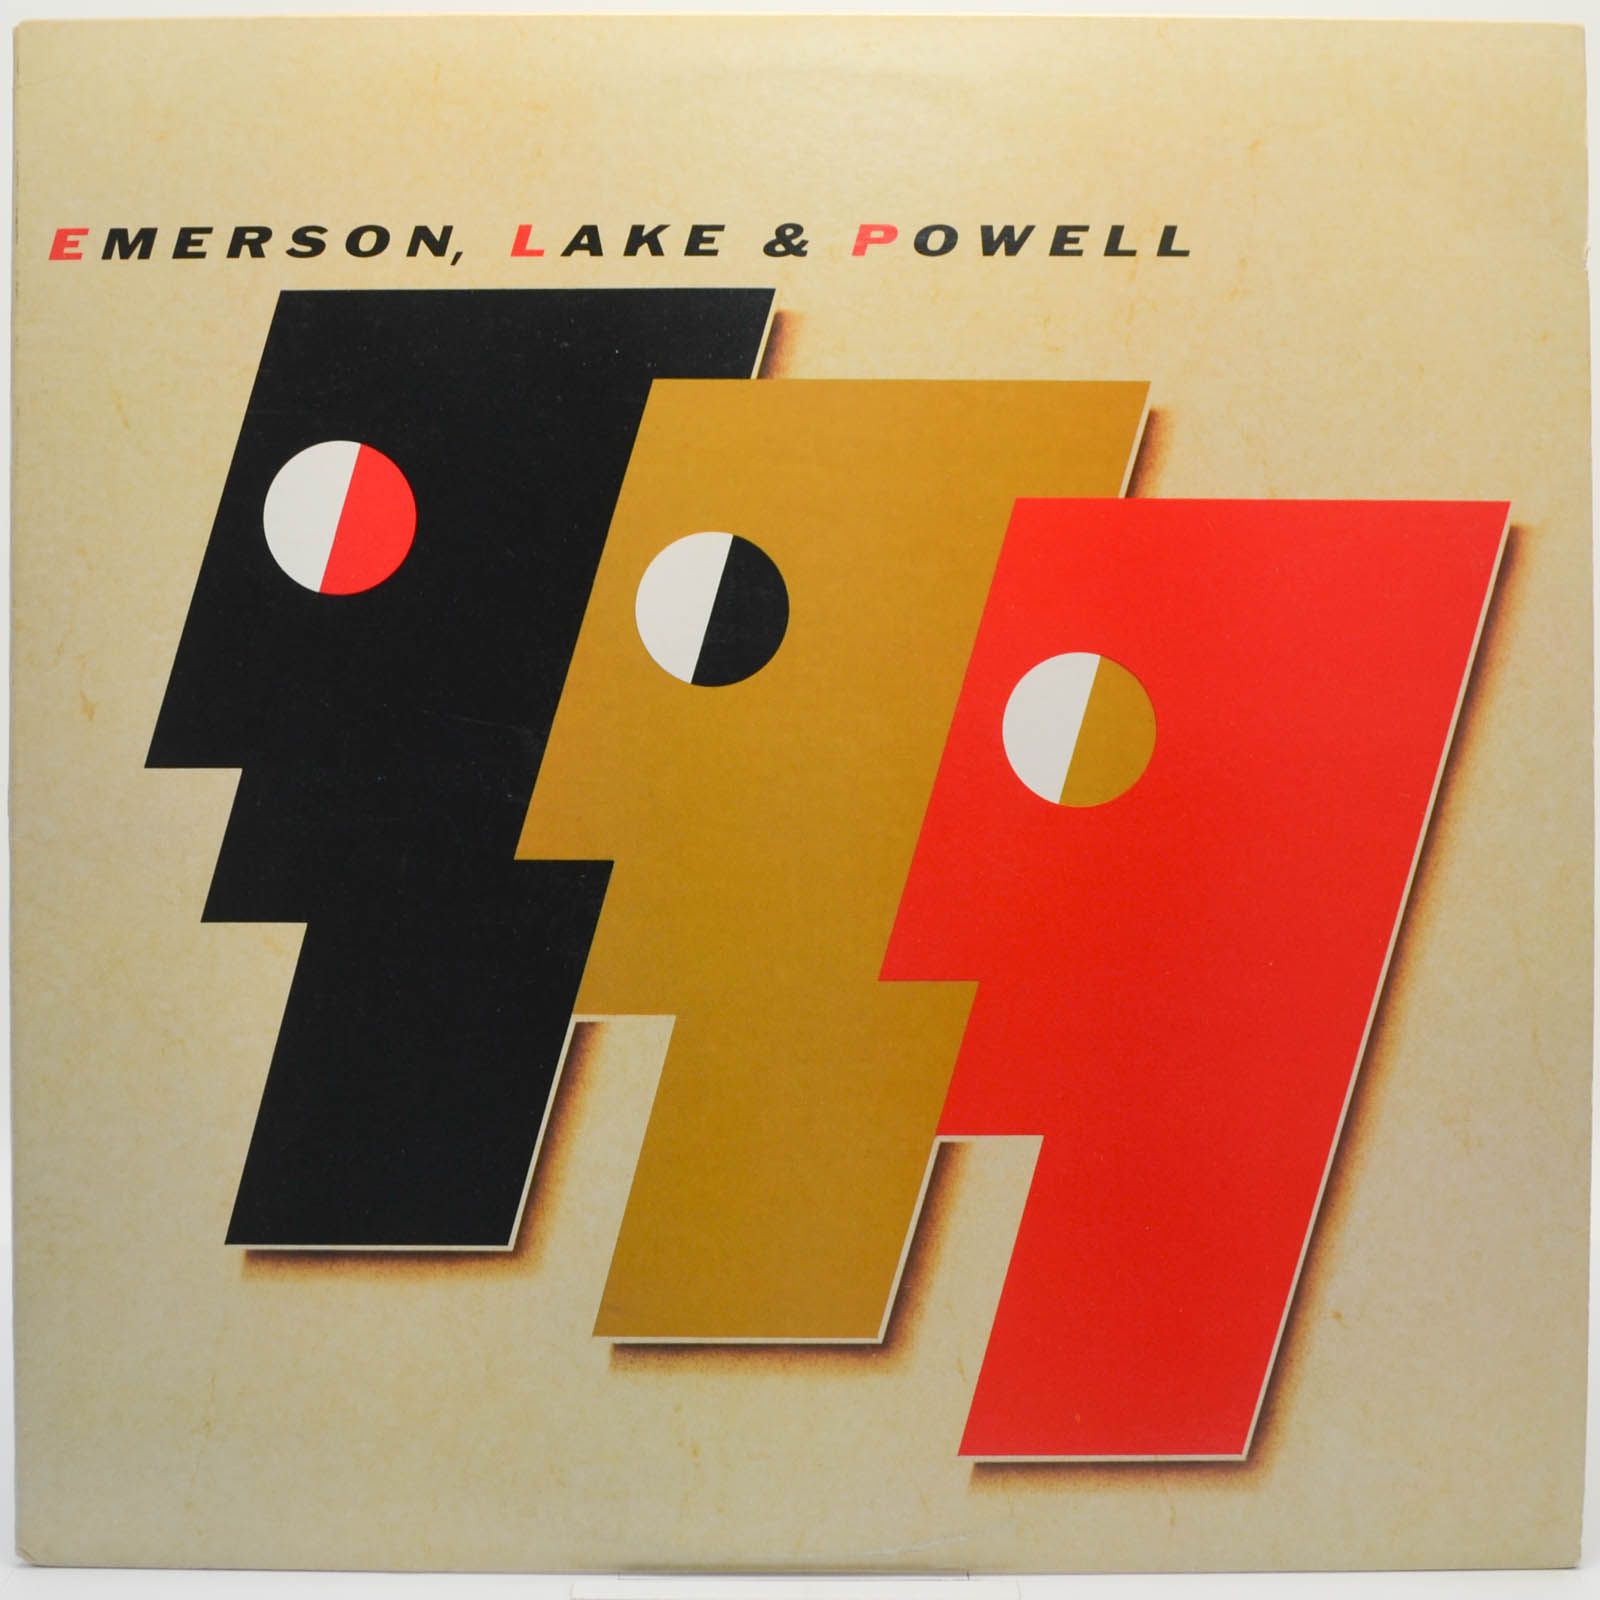 Emerson, Lake & Powell — Emerson, Lake & Powell (USA), 1986